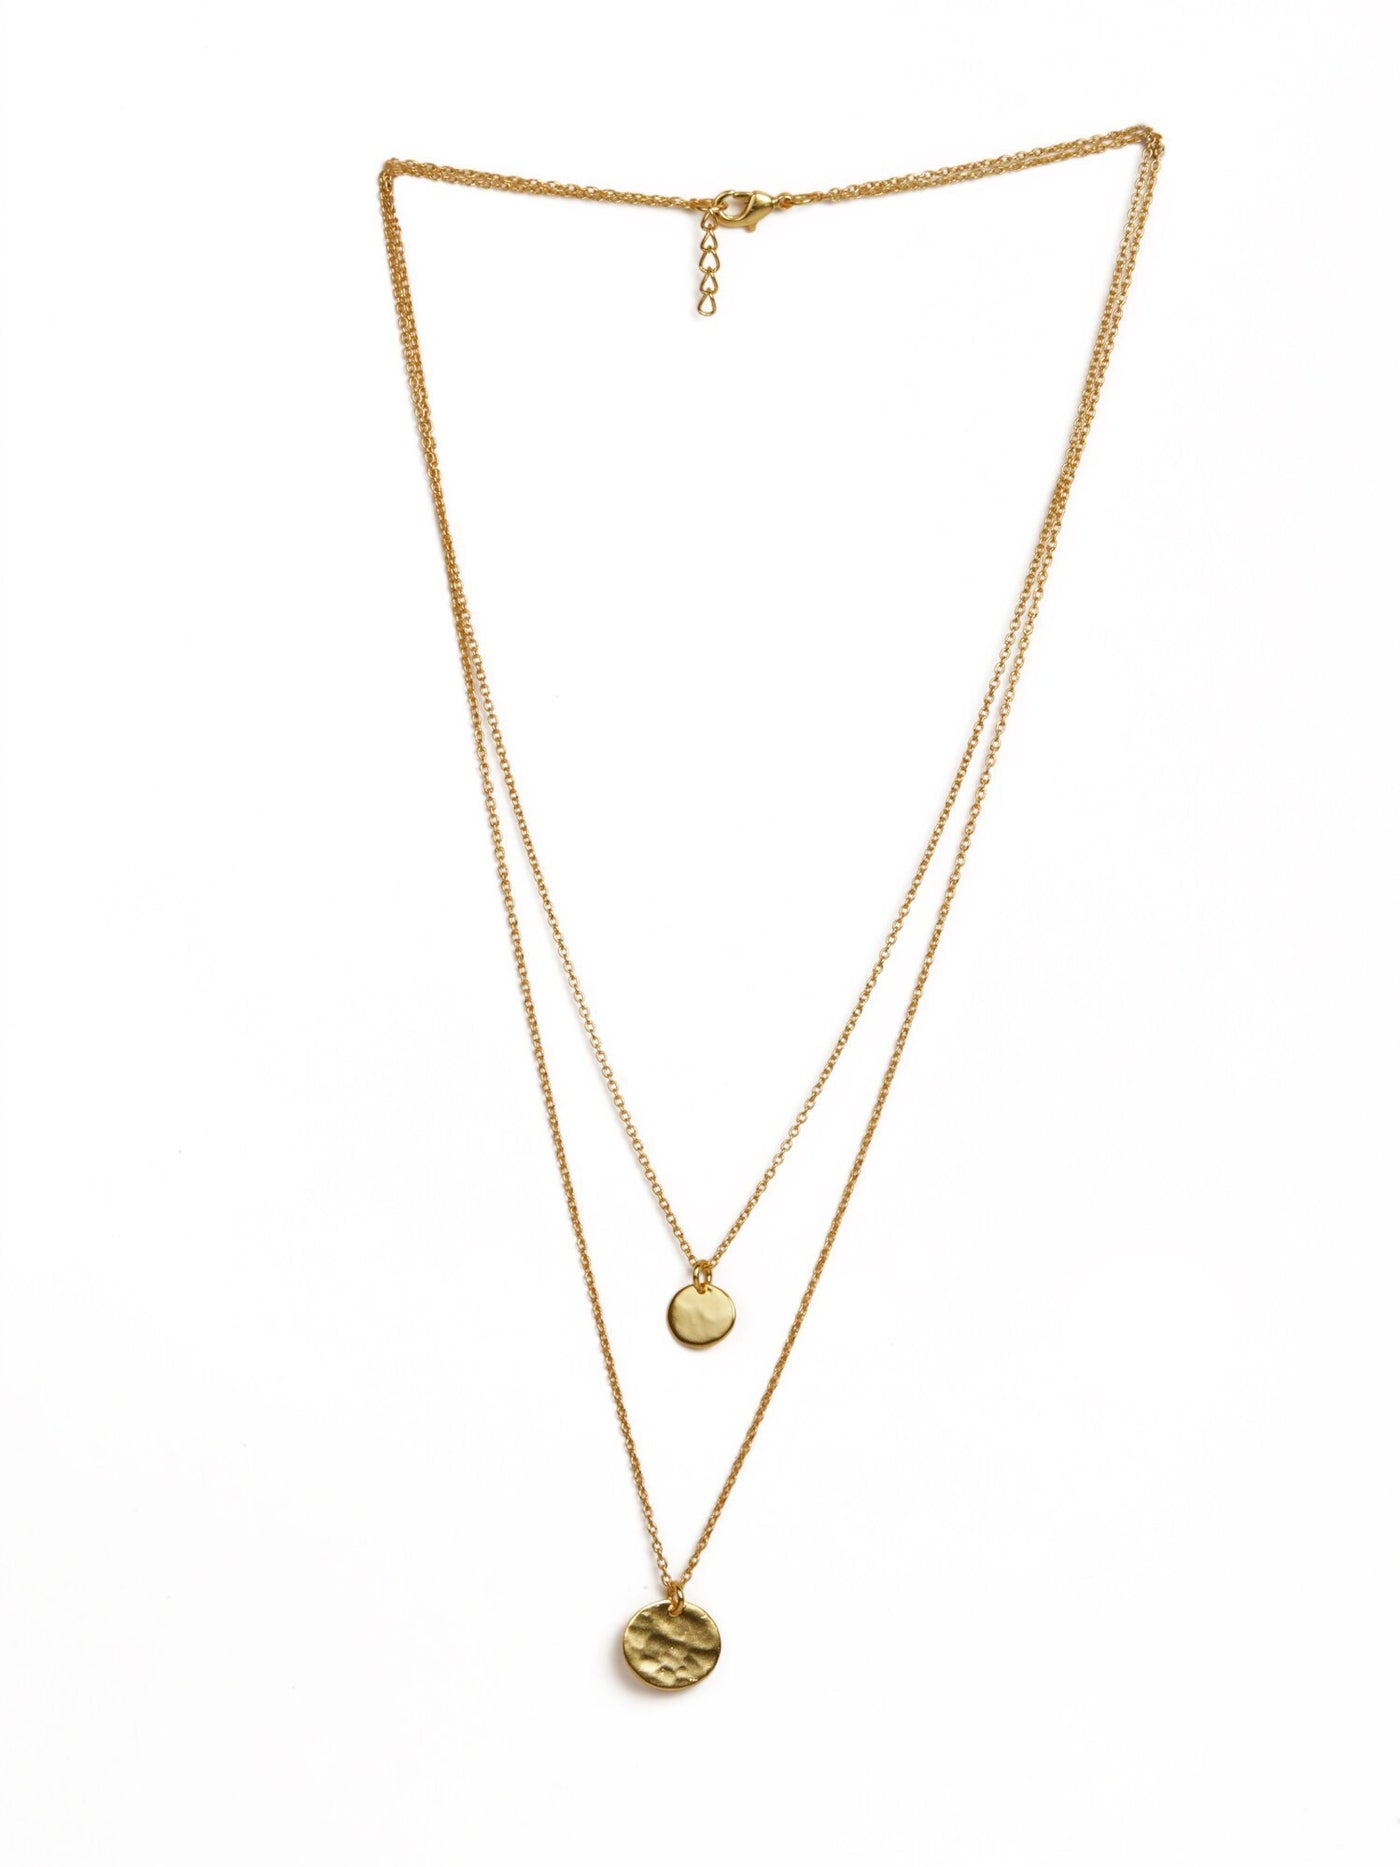 Gorgeous Layered Gold Necklace - Stilskii